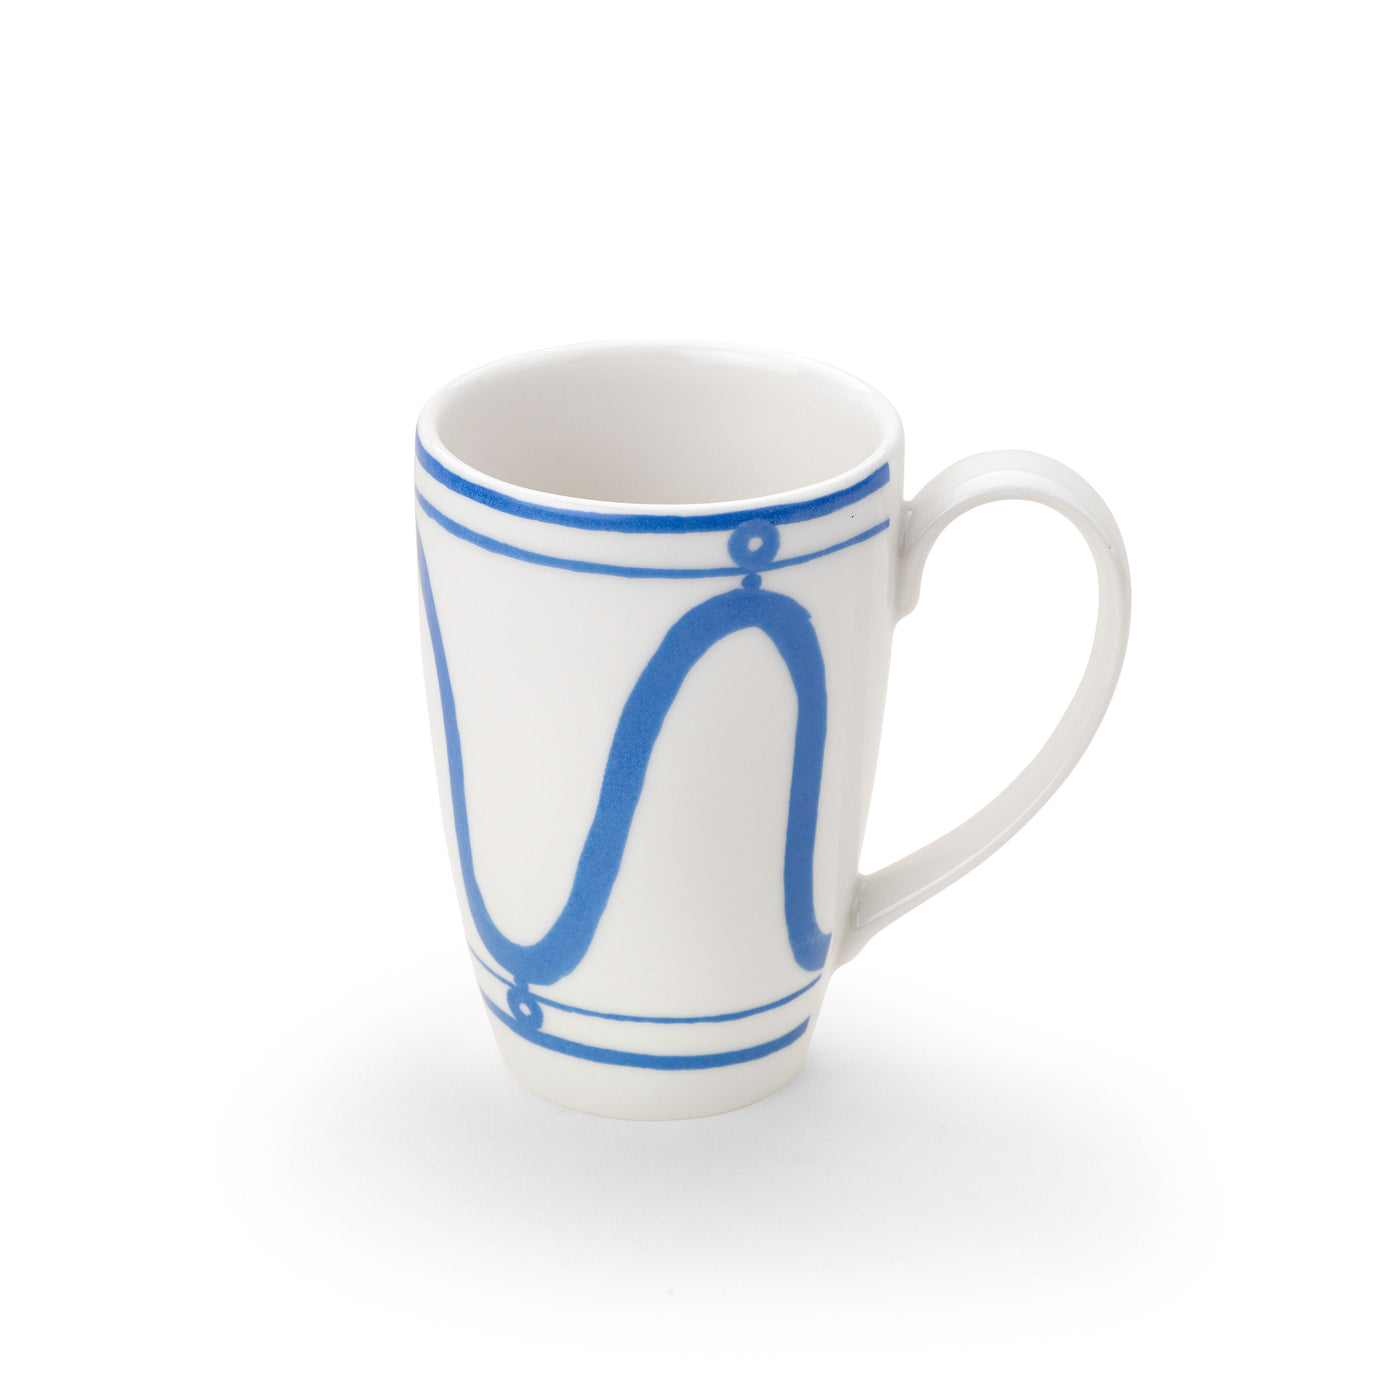 Serenity Mug in Blue